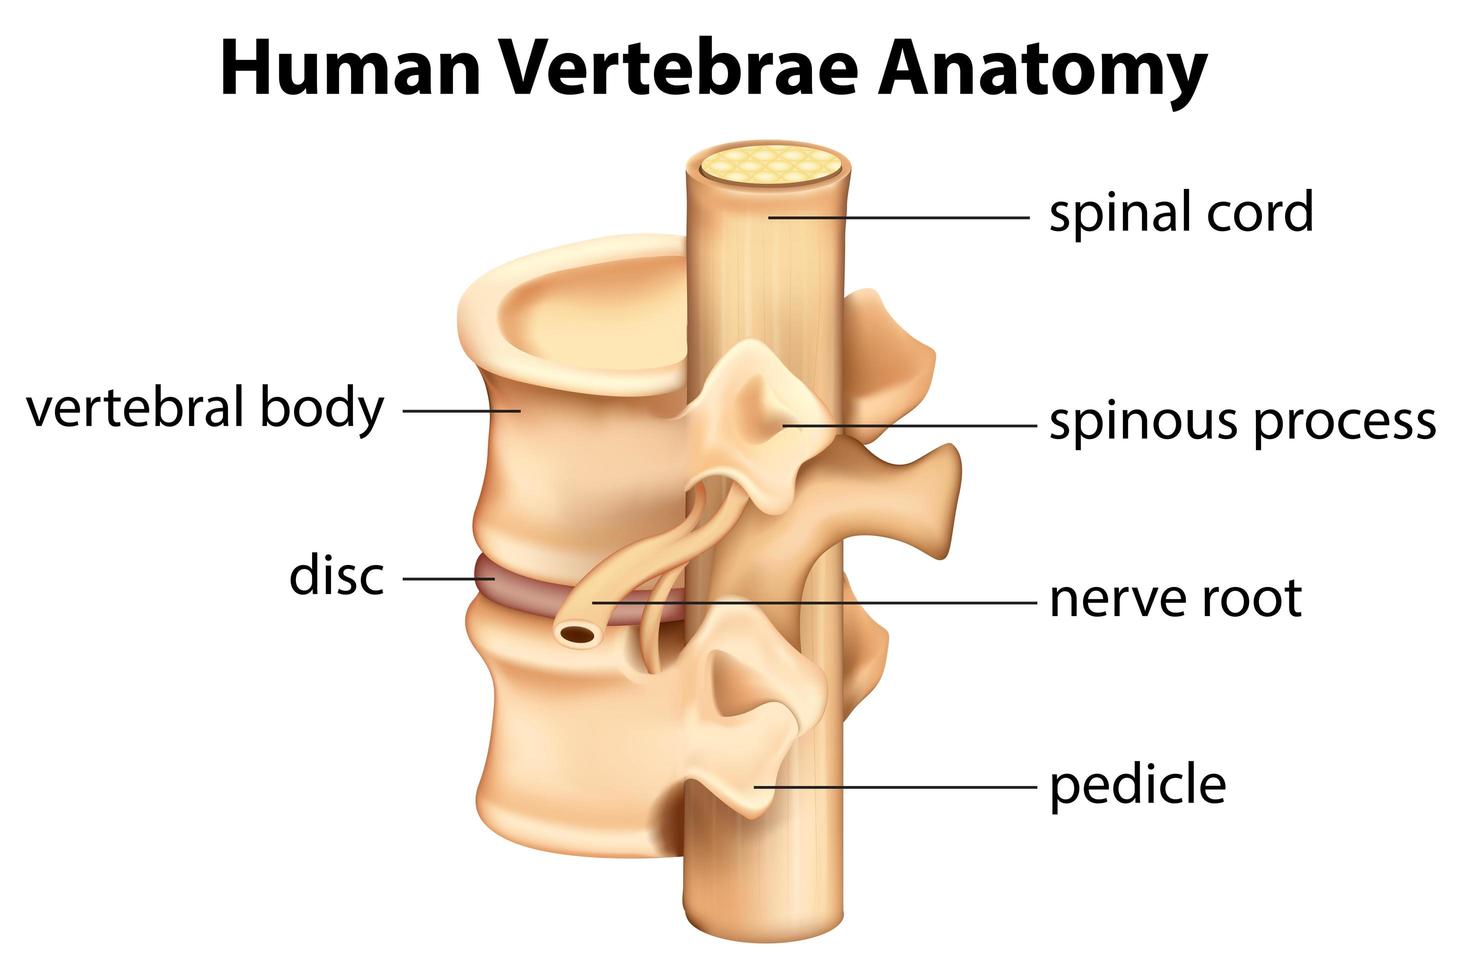 Human Vertebrae Anatomy Charts  vector